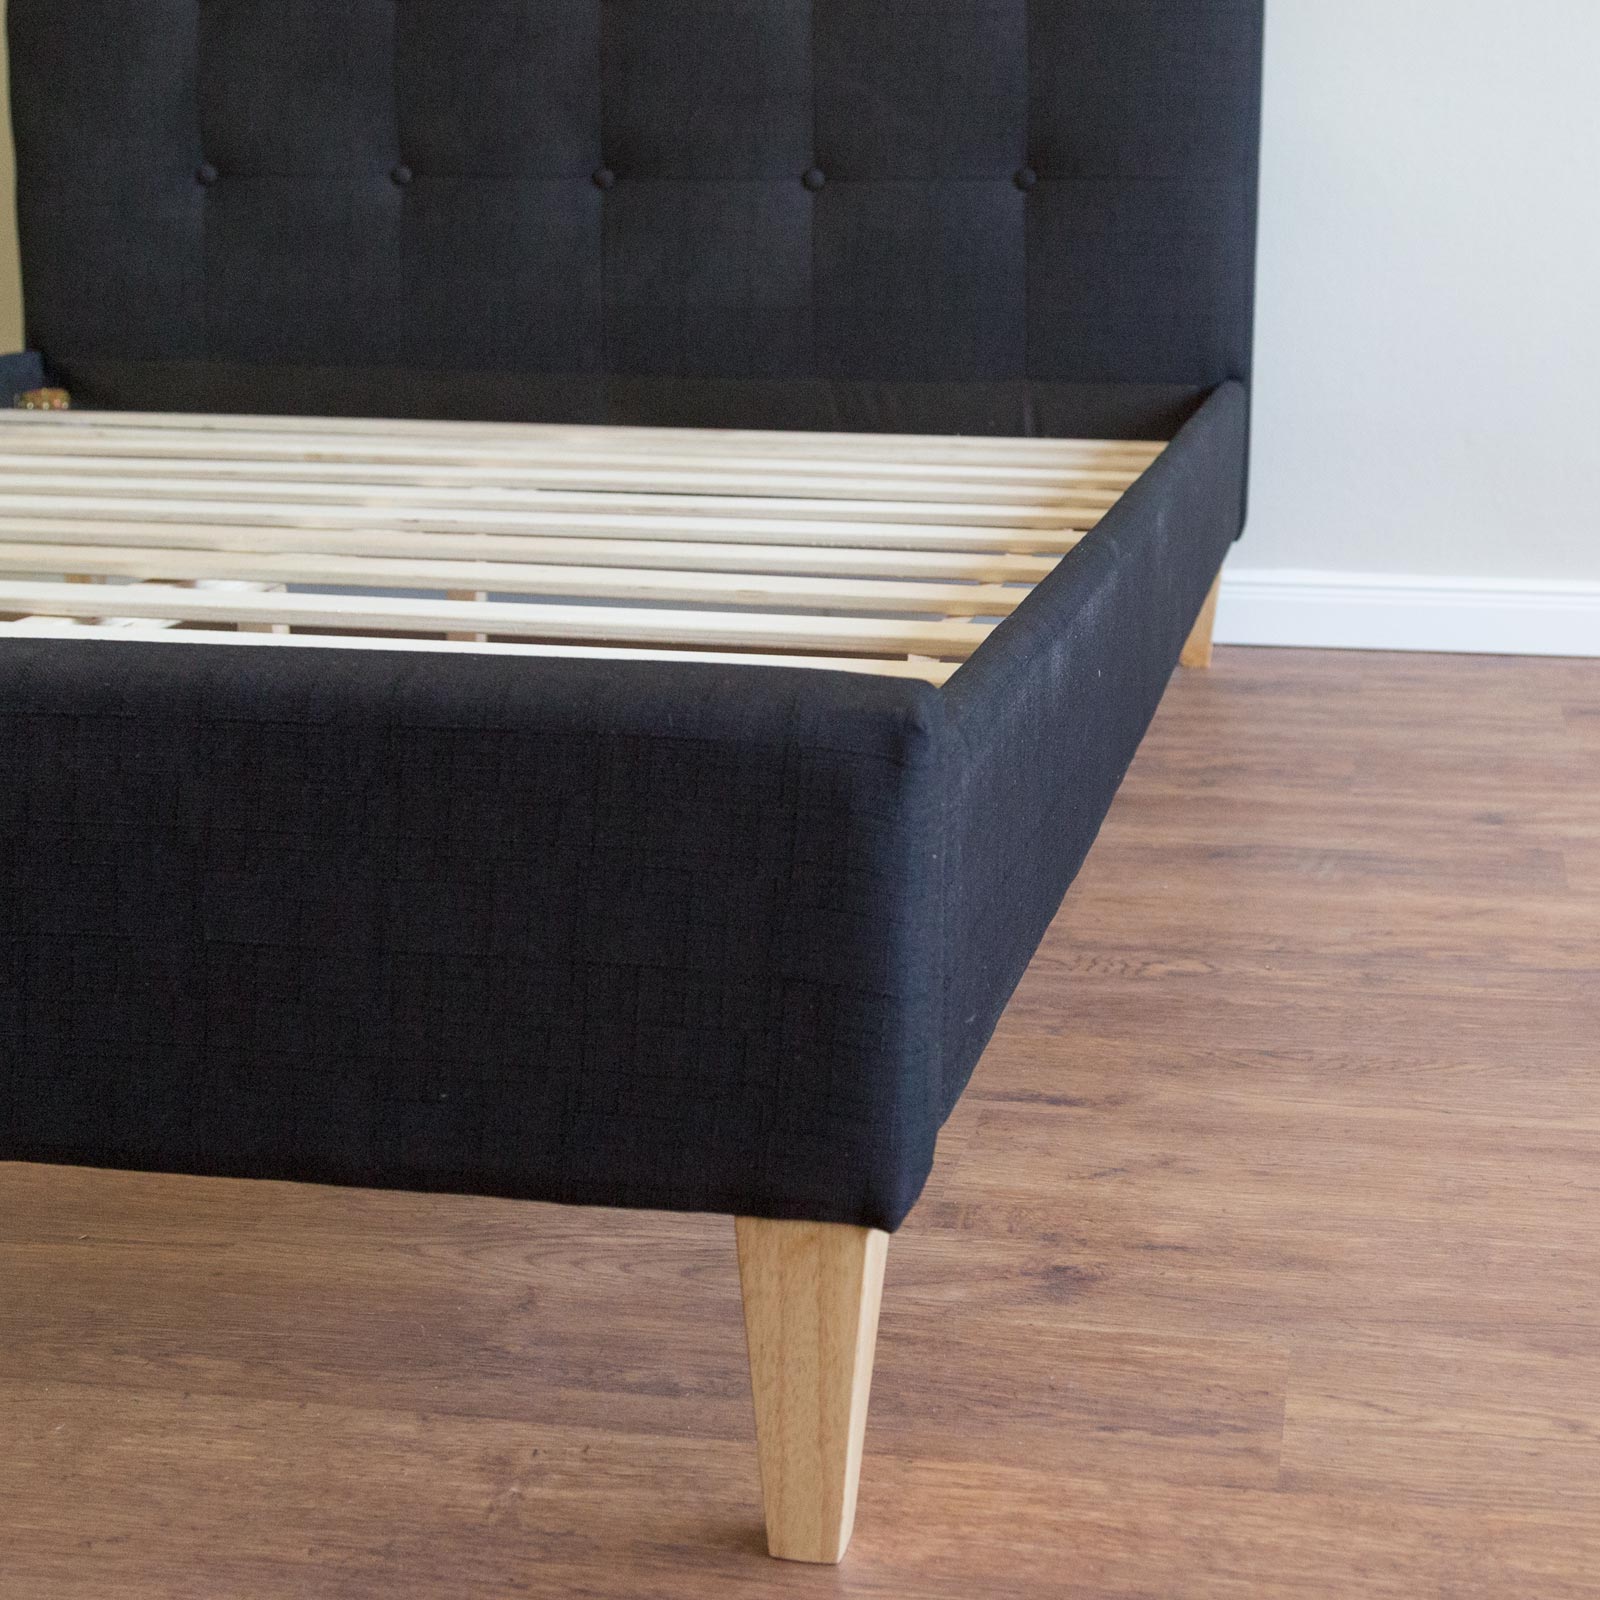 Upholstered Bed Bedside Table Slatted Frame Double Bed 140 160 180 x200 cm Bed Side Table Black Grey Brown